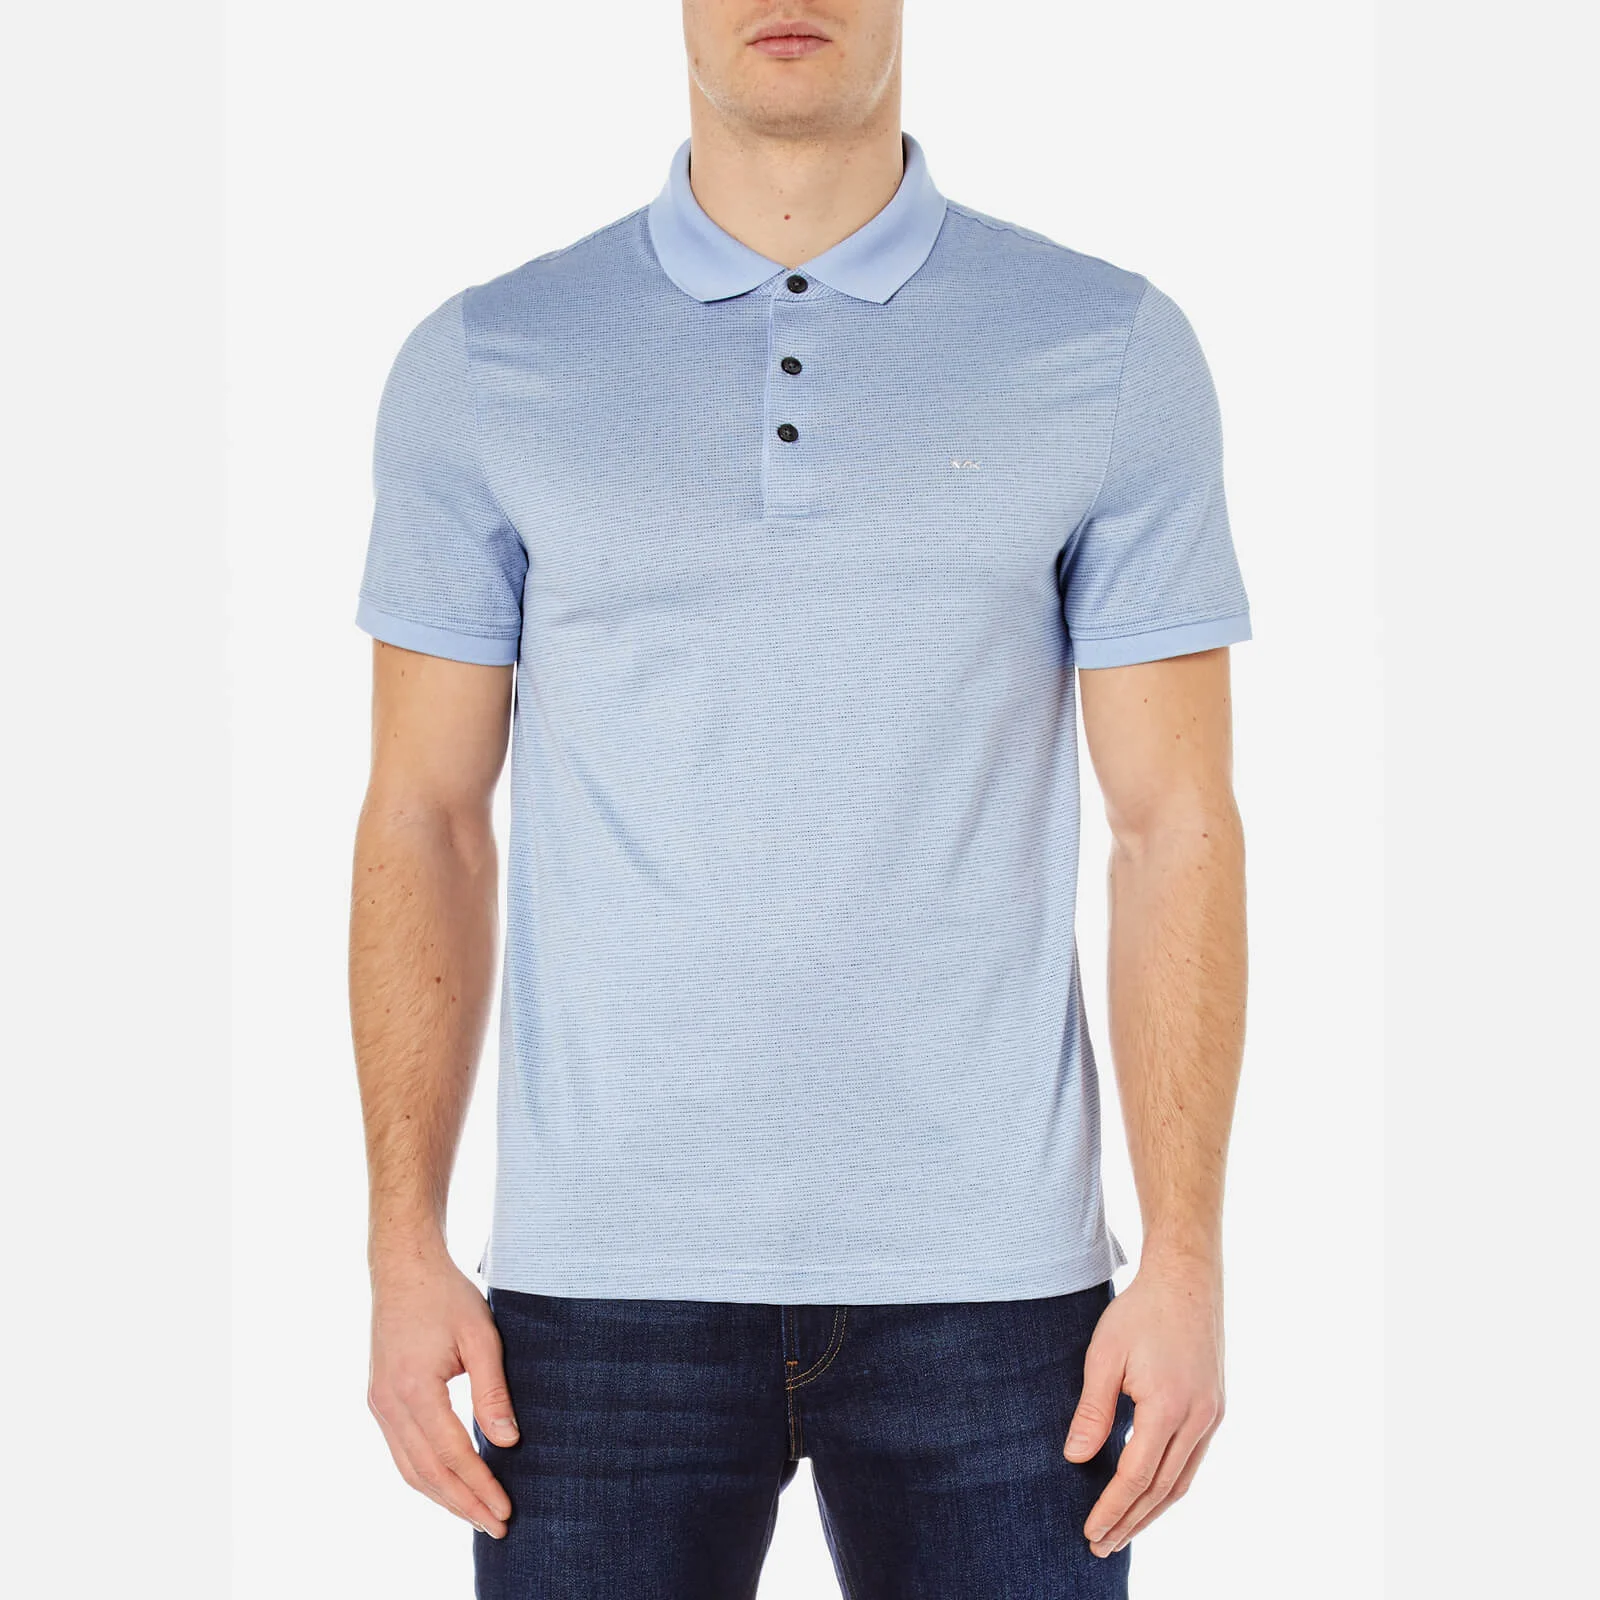 Michael Kors Men's Jacquard Polo Shirt - Steel Blue Image 1